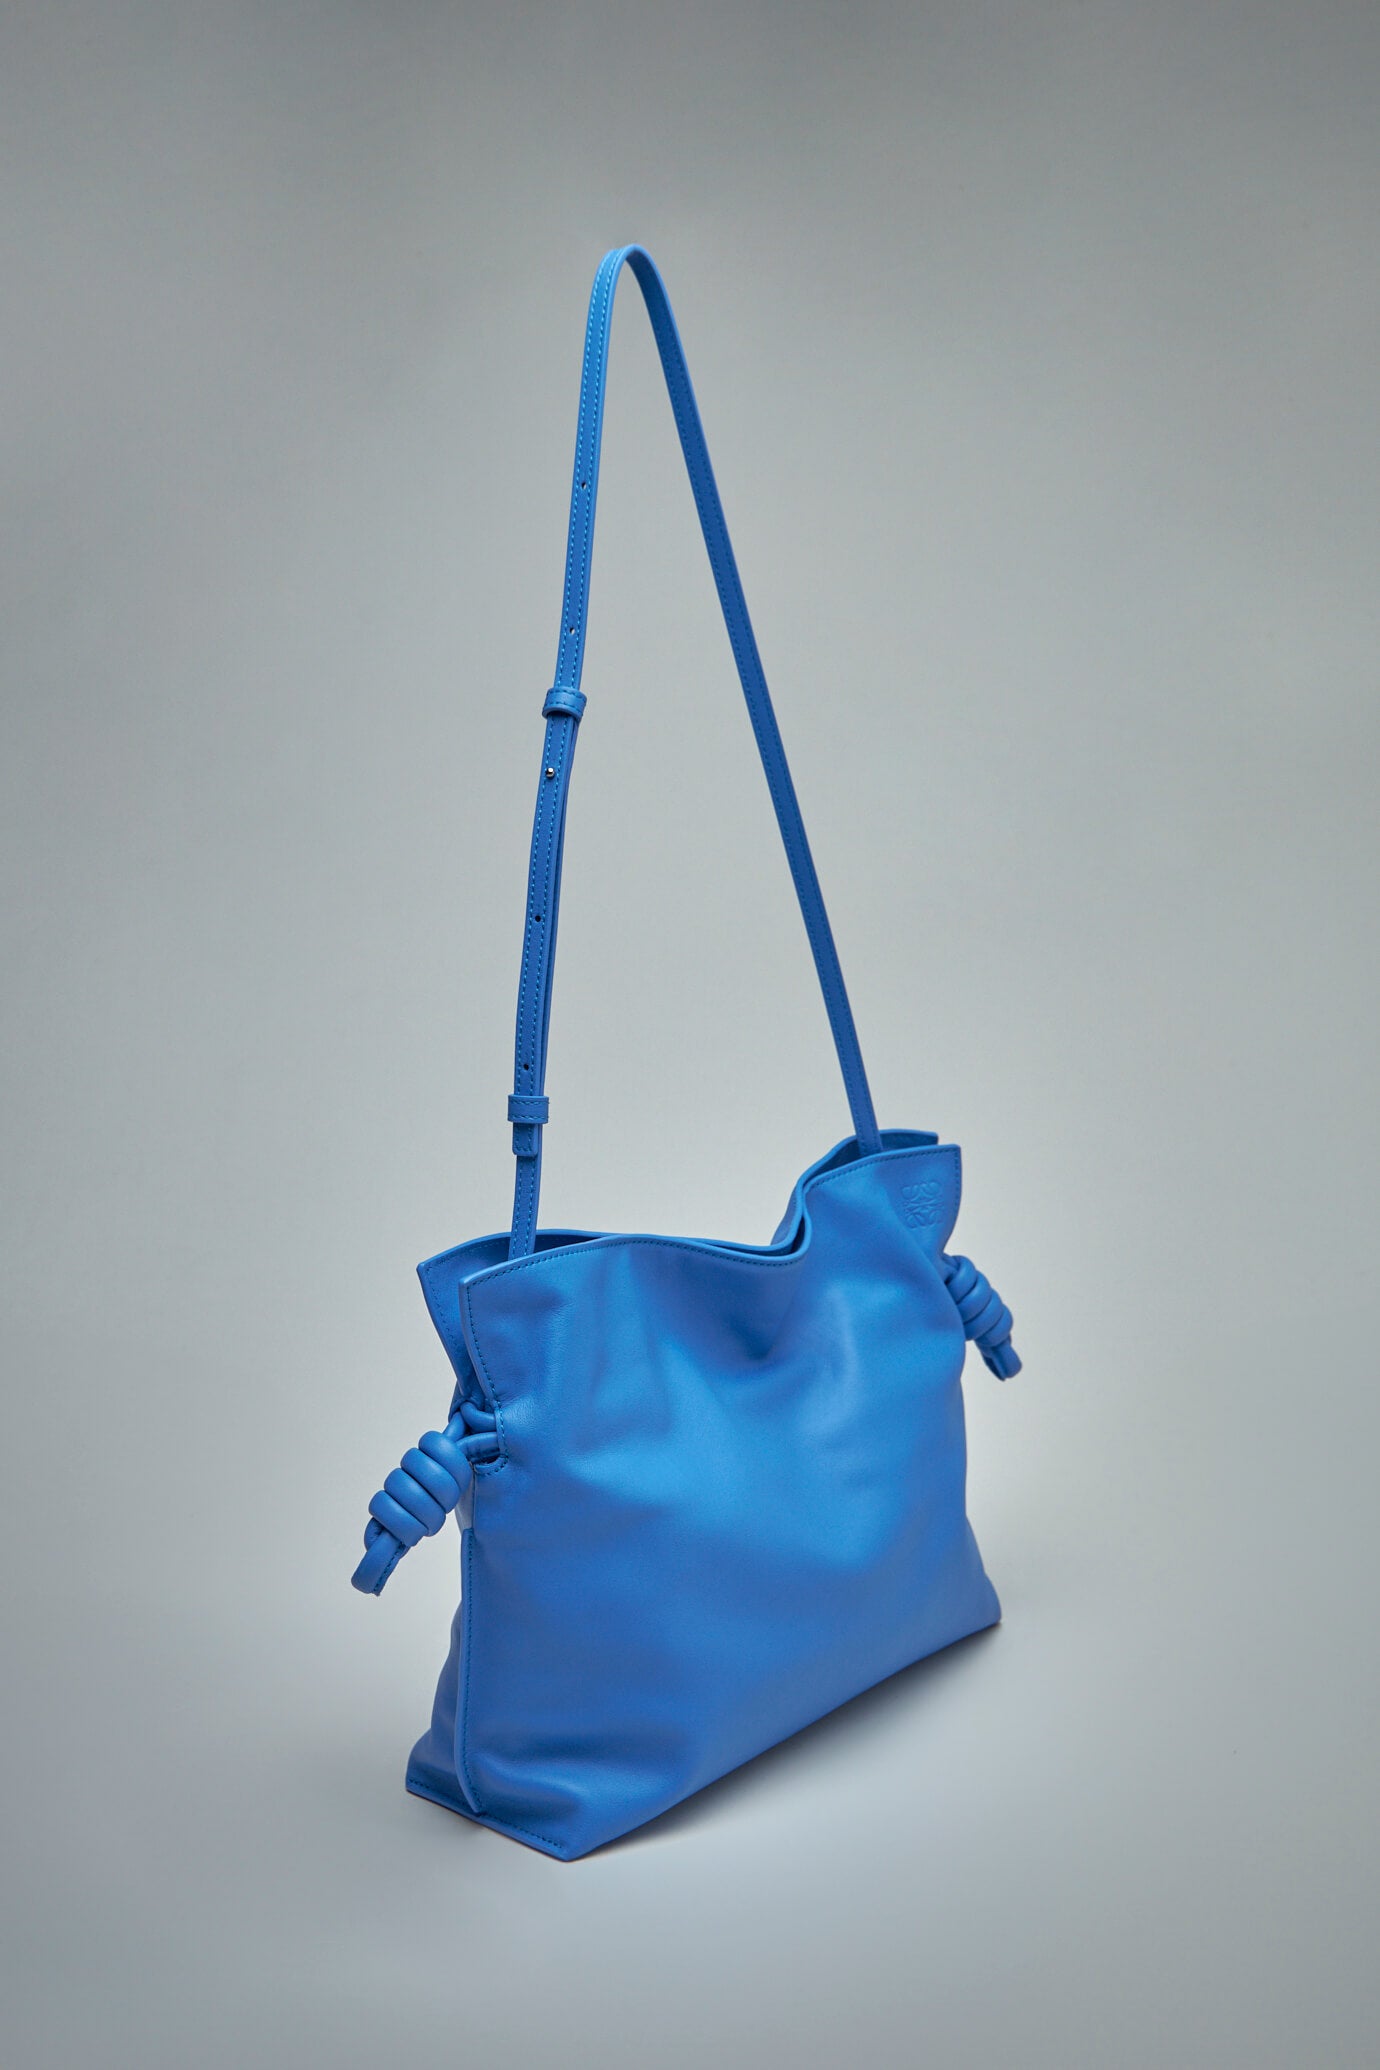 Loewe Flamenco Mini Metallic Clutch Bag